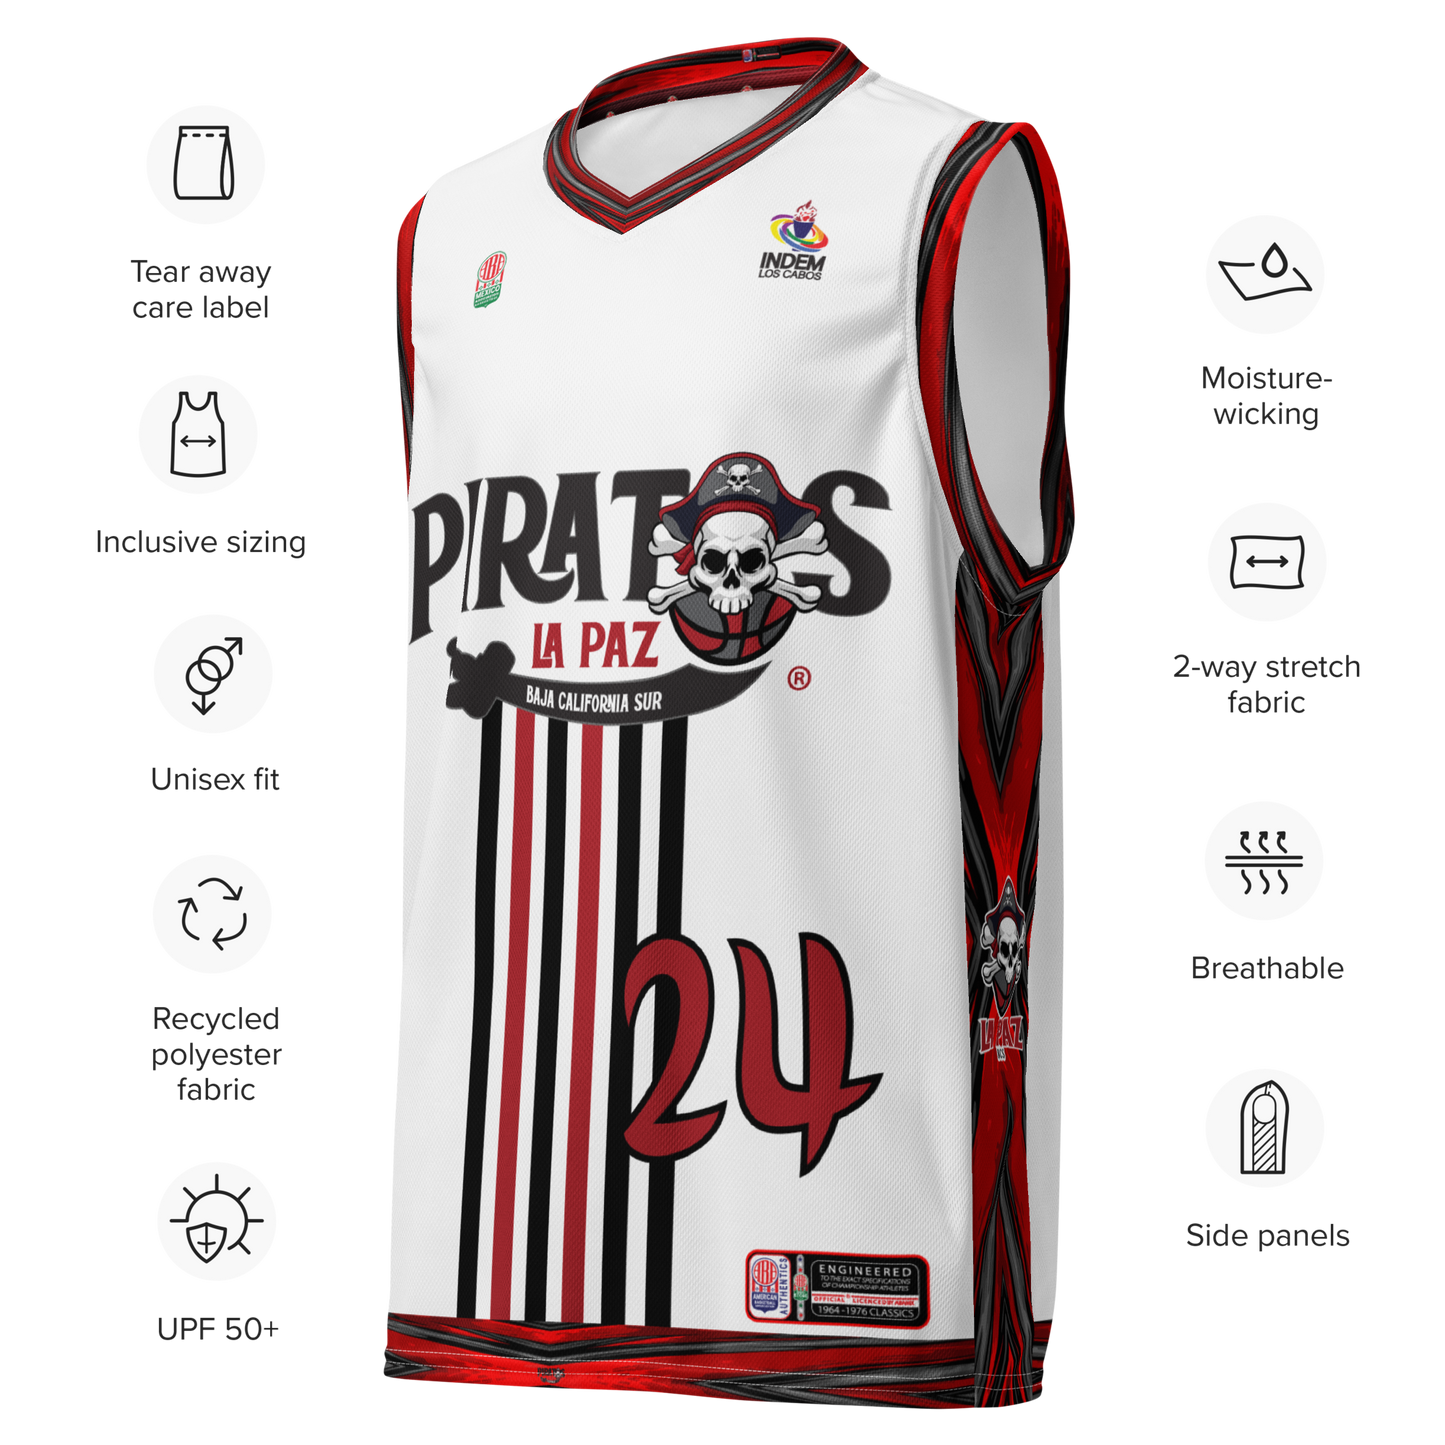 The La Paz Piratas Basketball Team's White Home Jersey